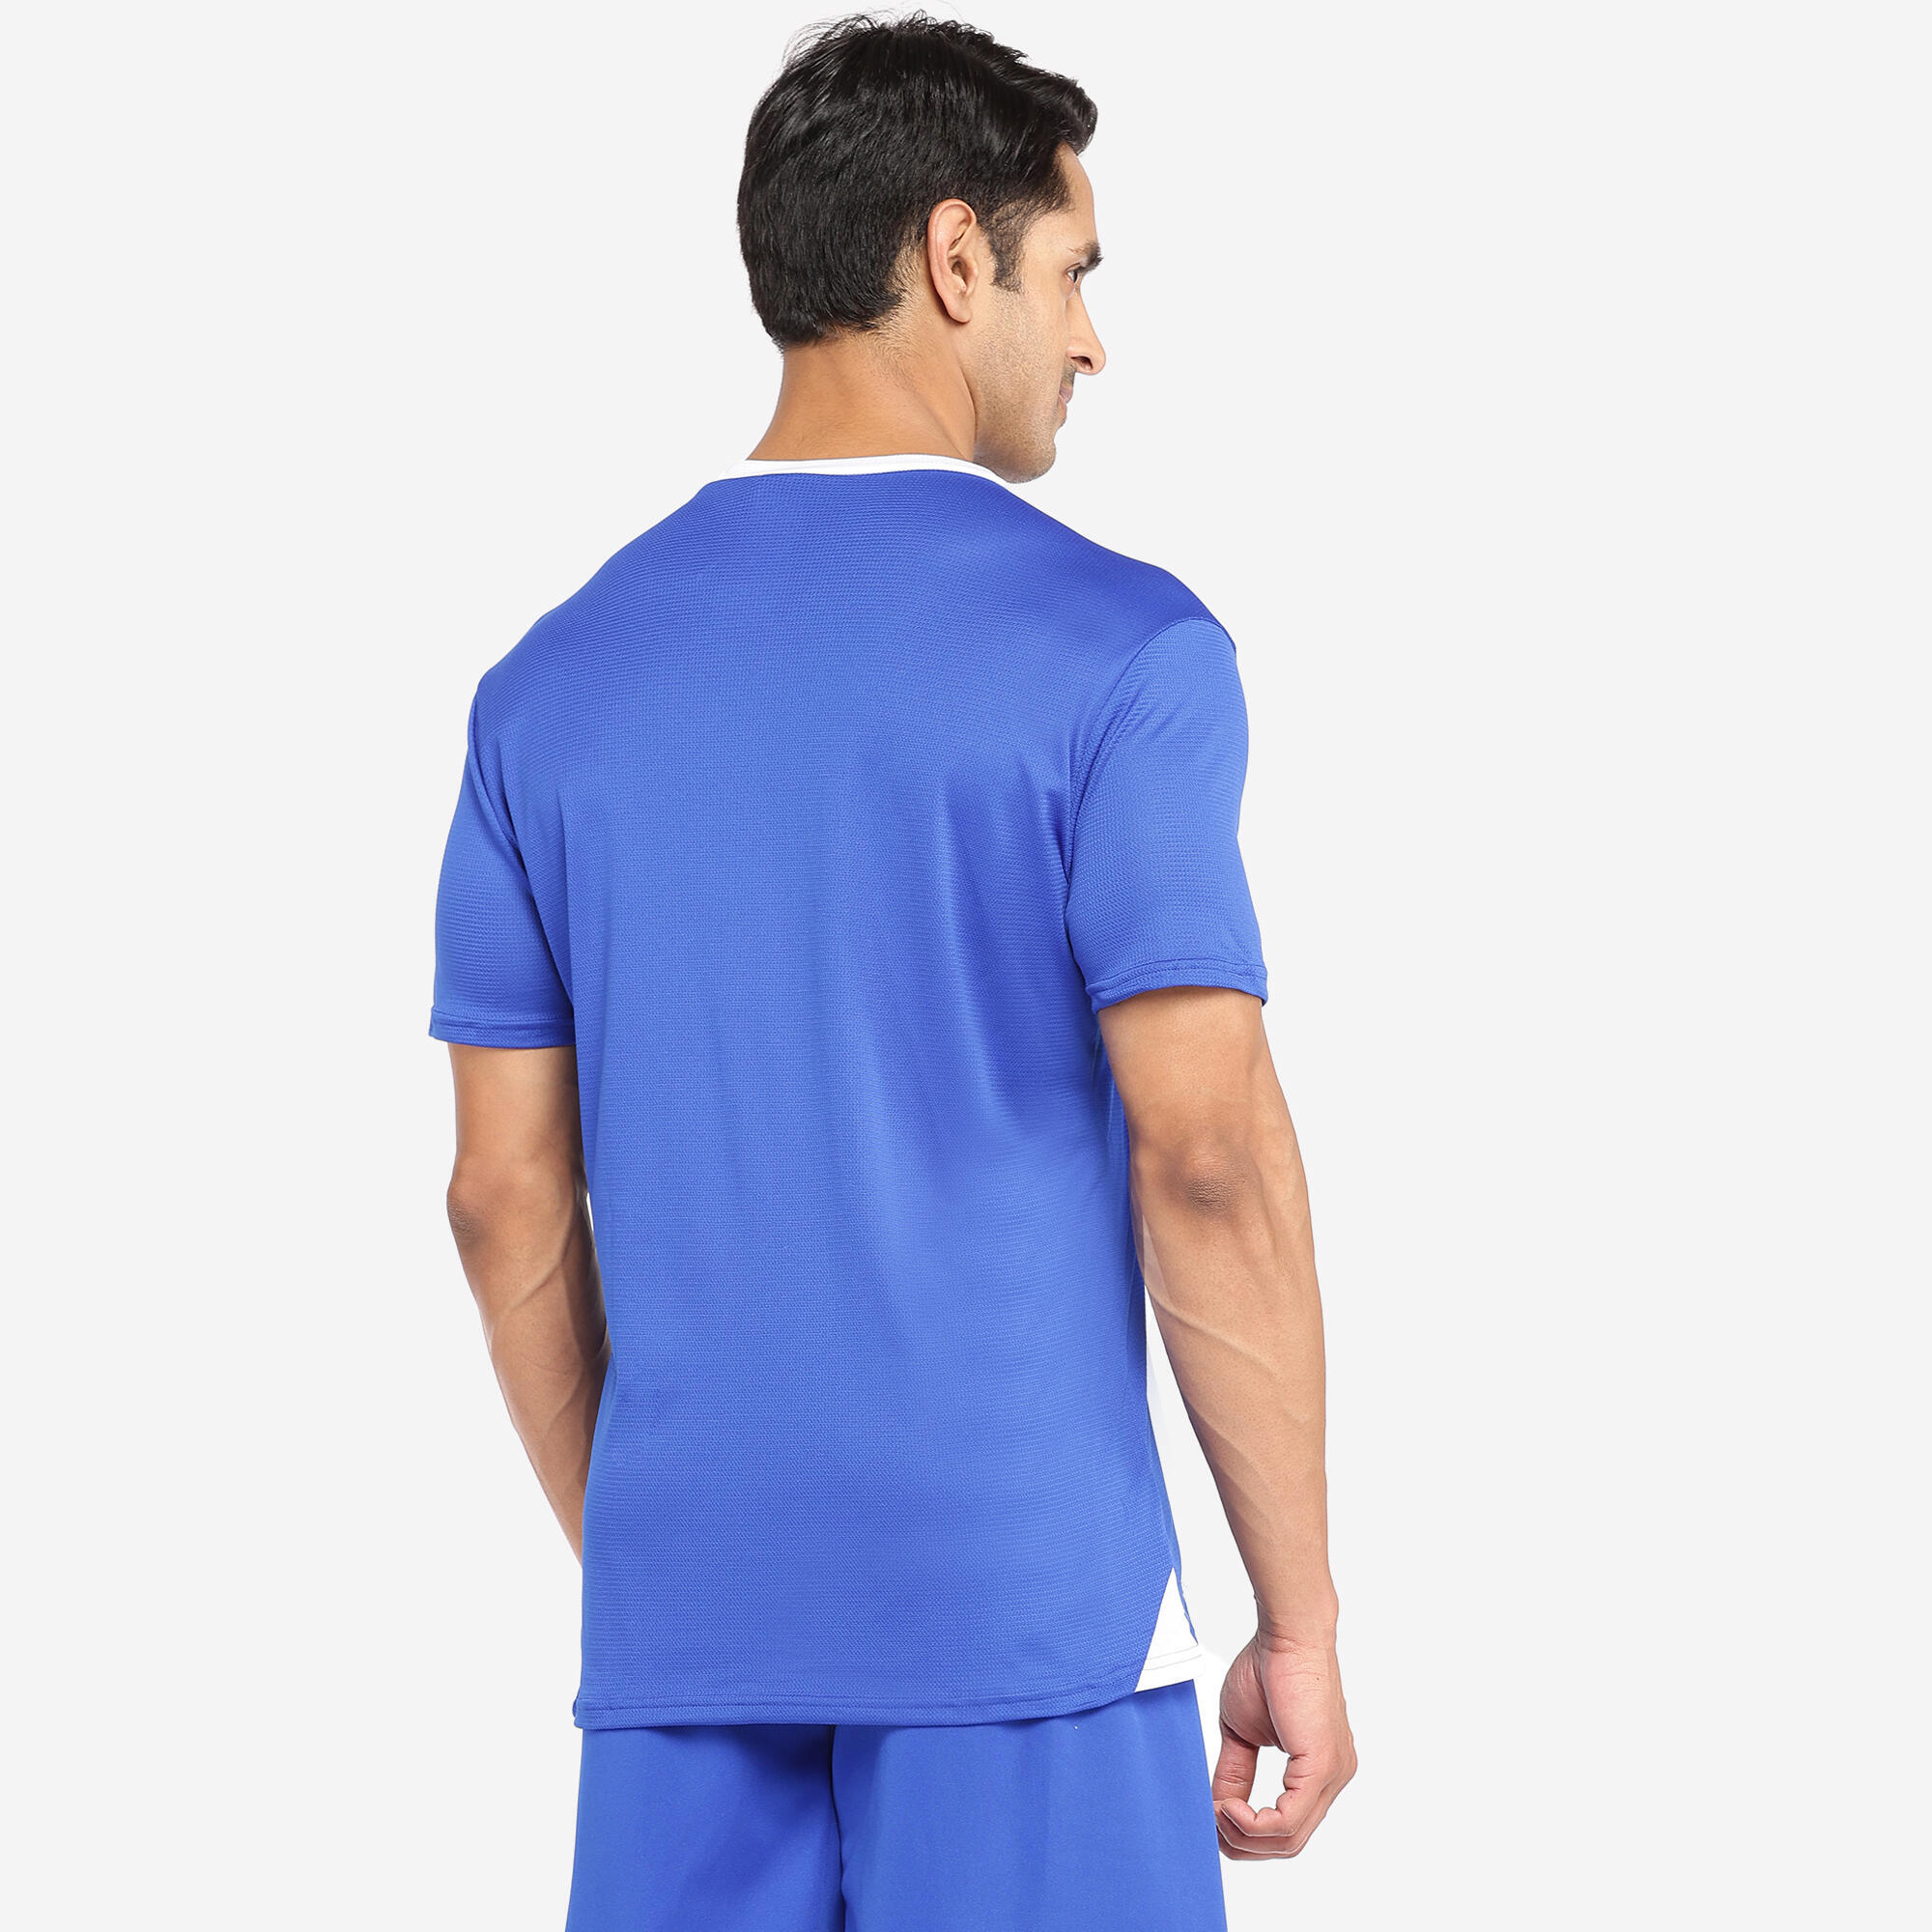 Refurbished Adult Football Shirt Essential - Blue - A Grade 7/7